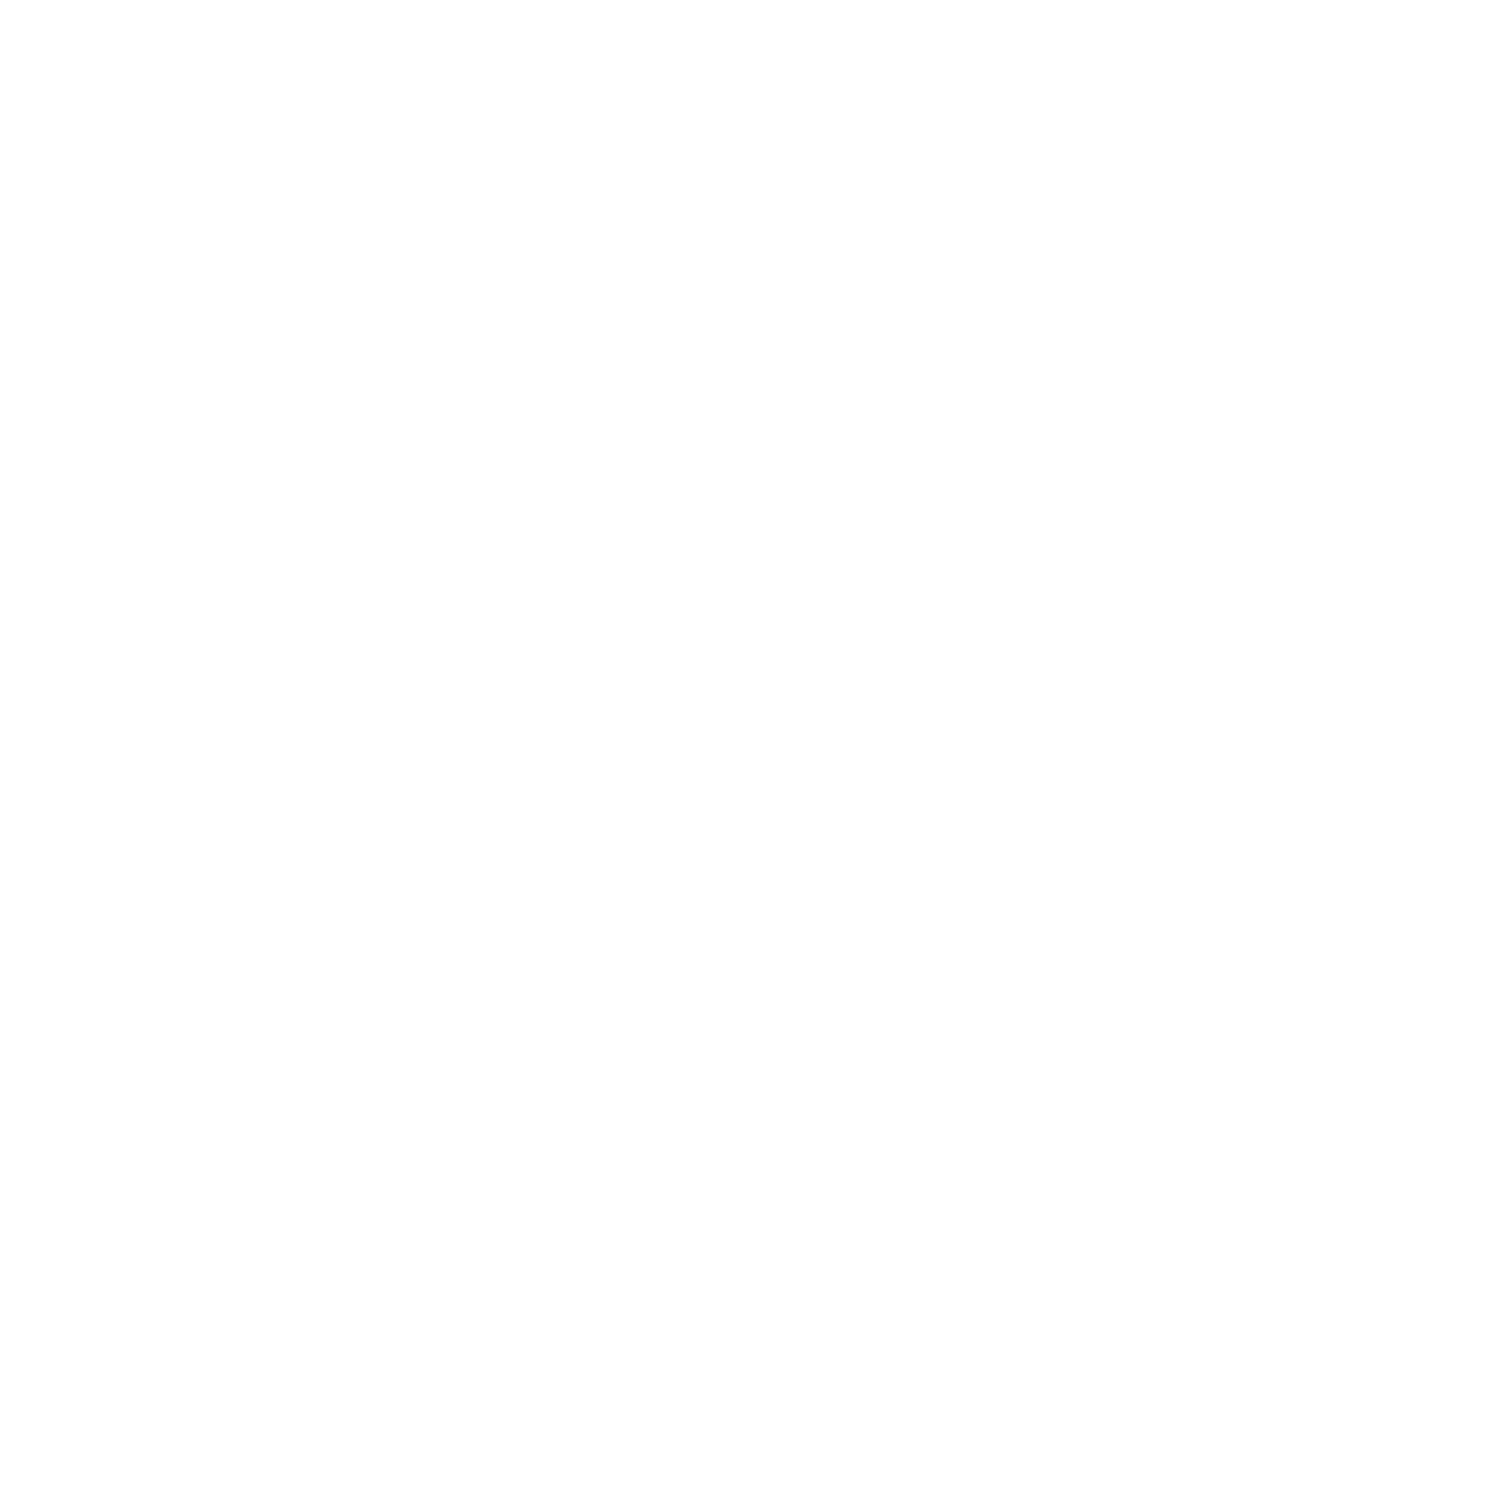 Hawea Lakehouse